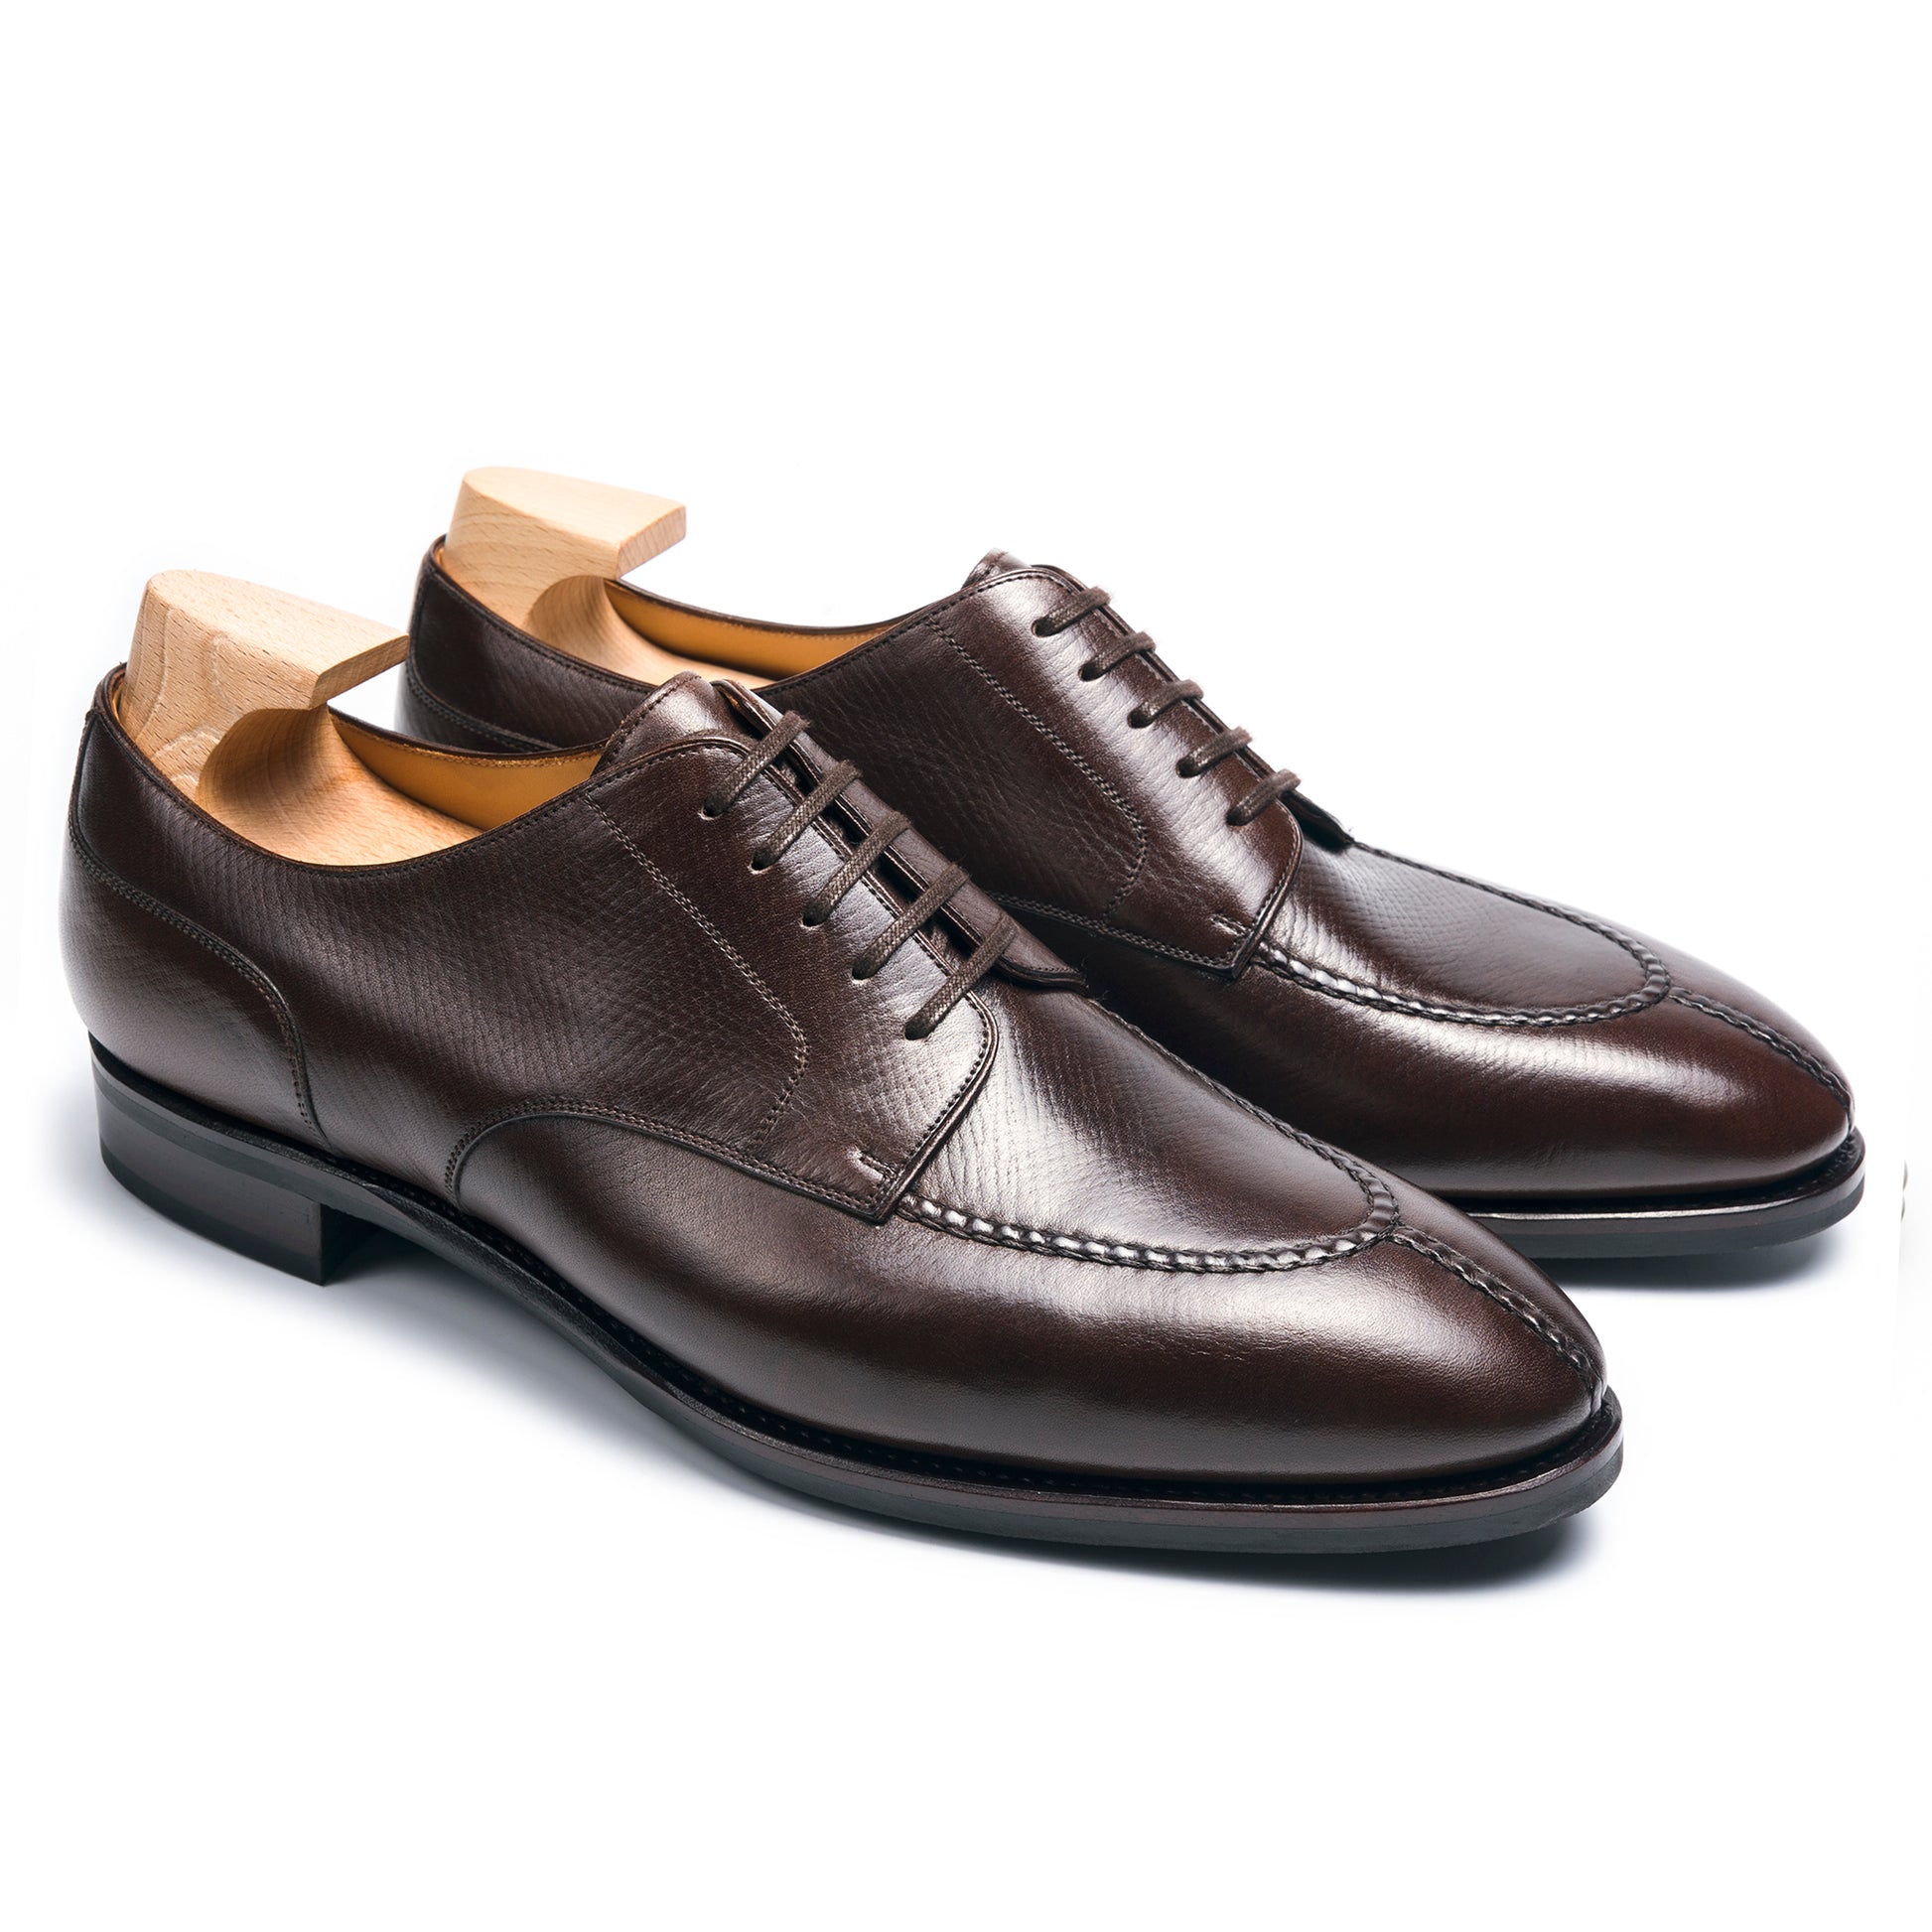 TLB Mallorca leather shoes 136 / GOYA / HATCH GRAIN DARK BROWN